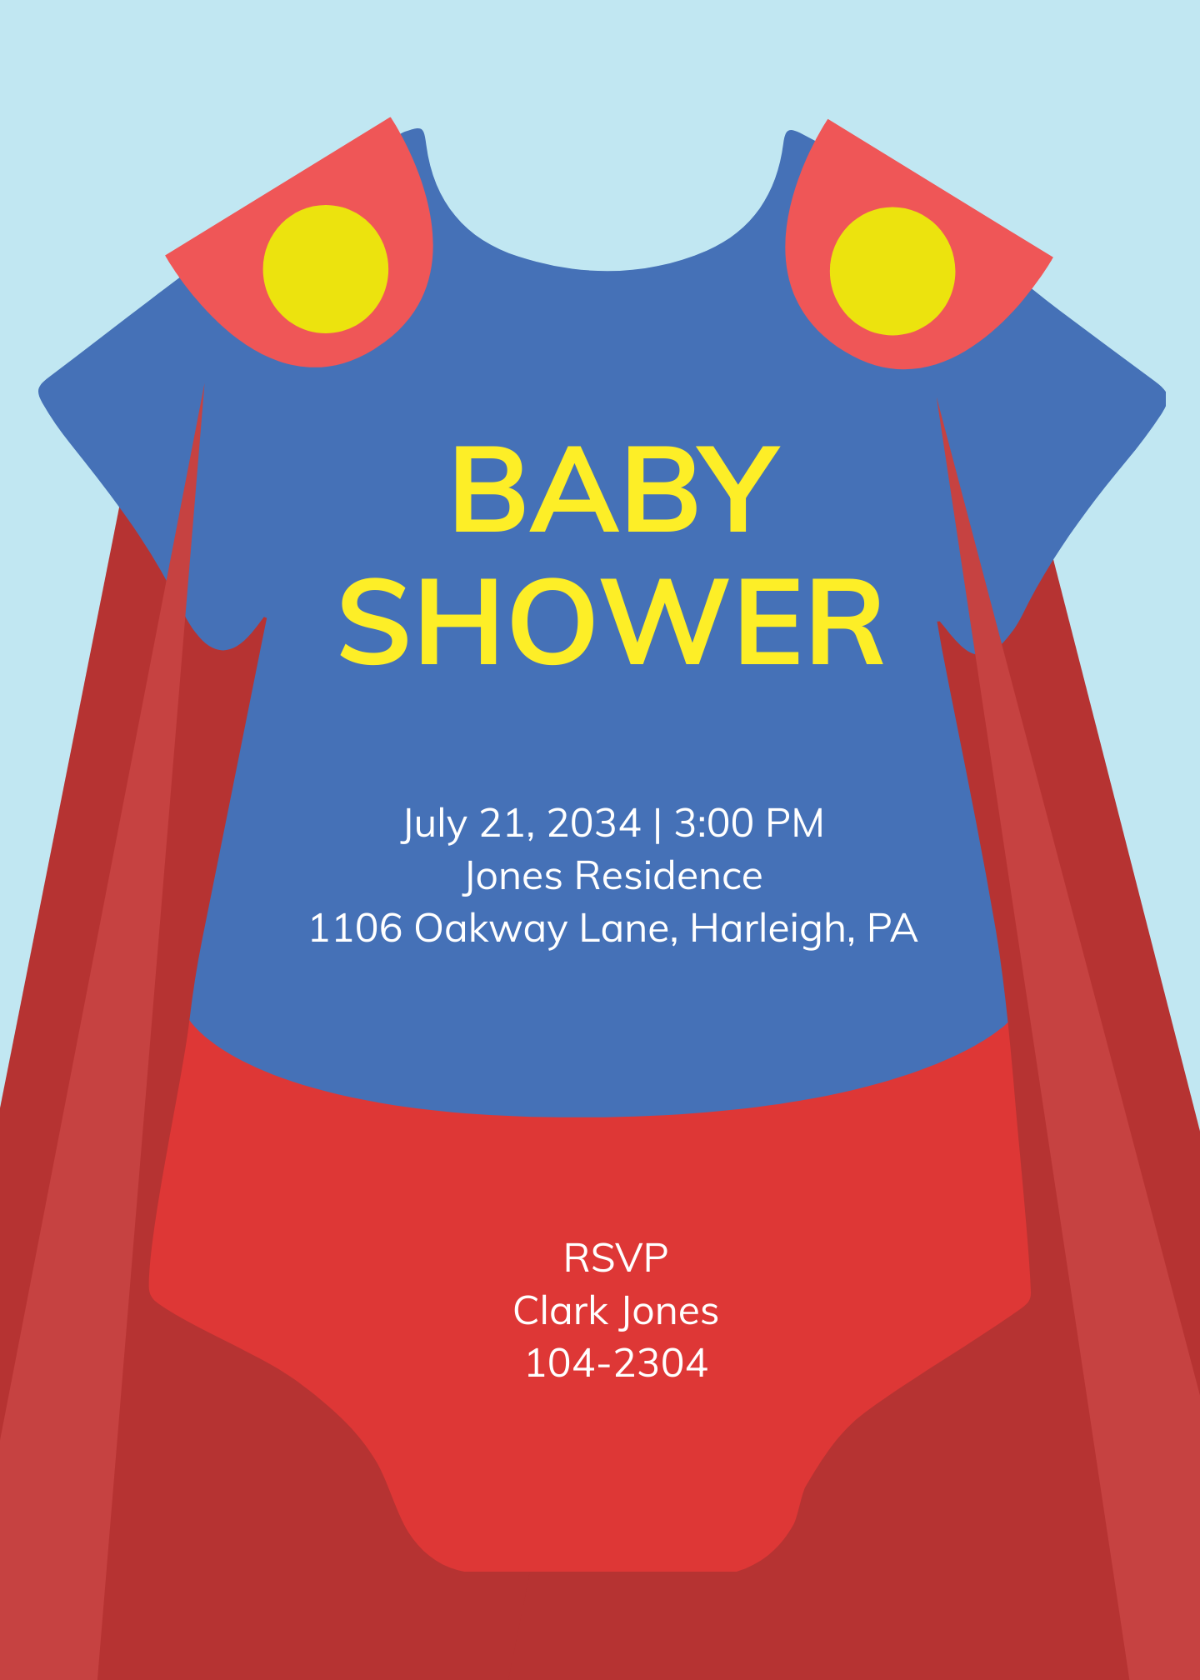 Superhero Onesie Baby Shower Invitation Template